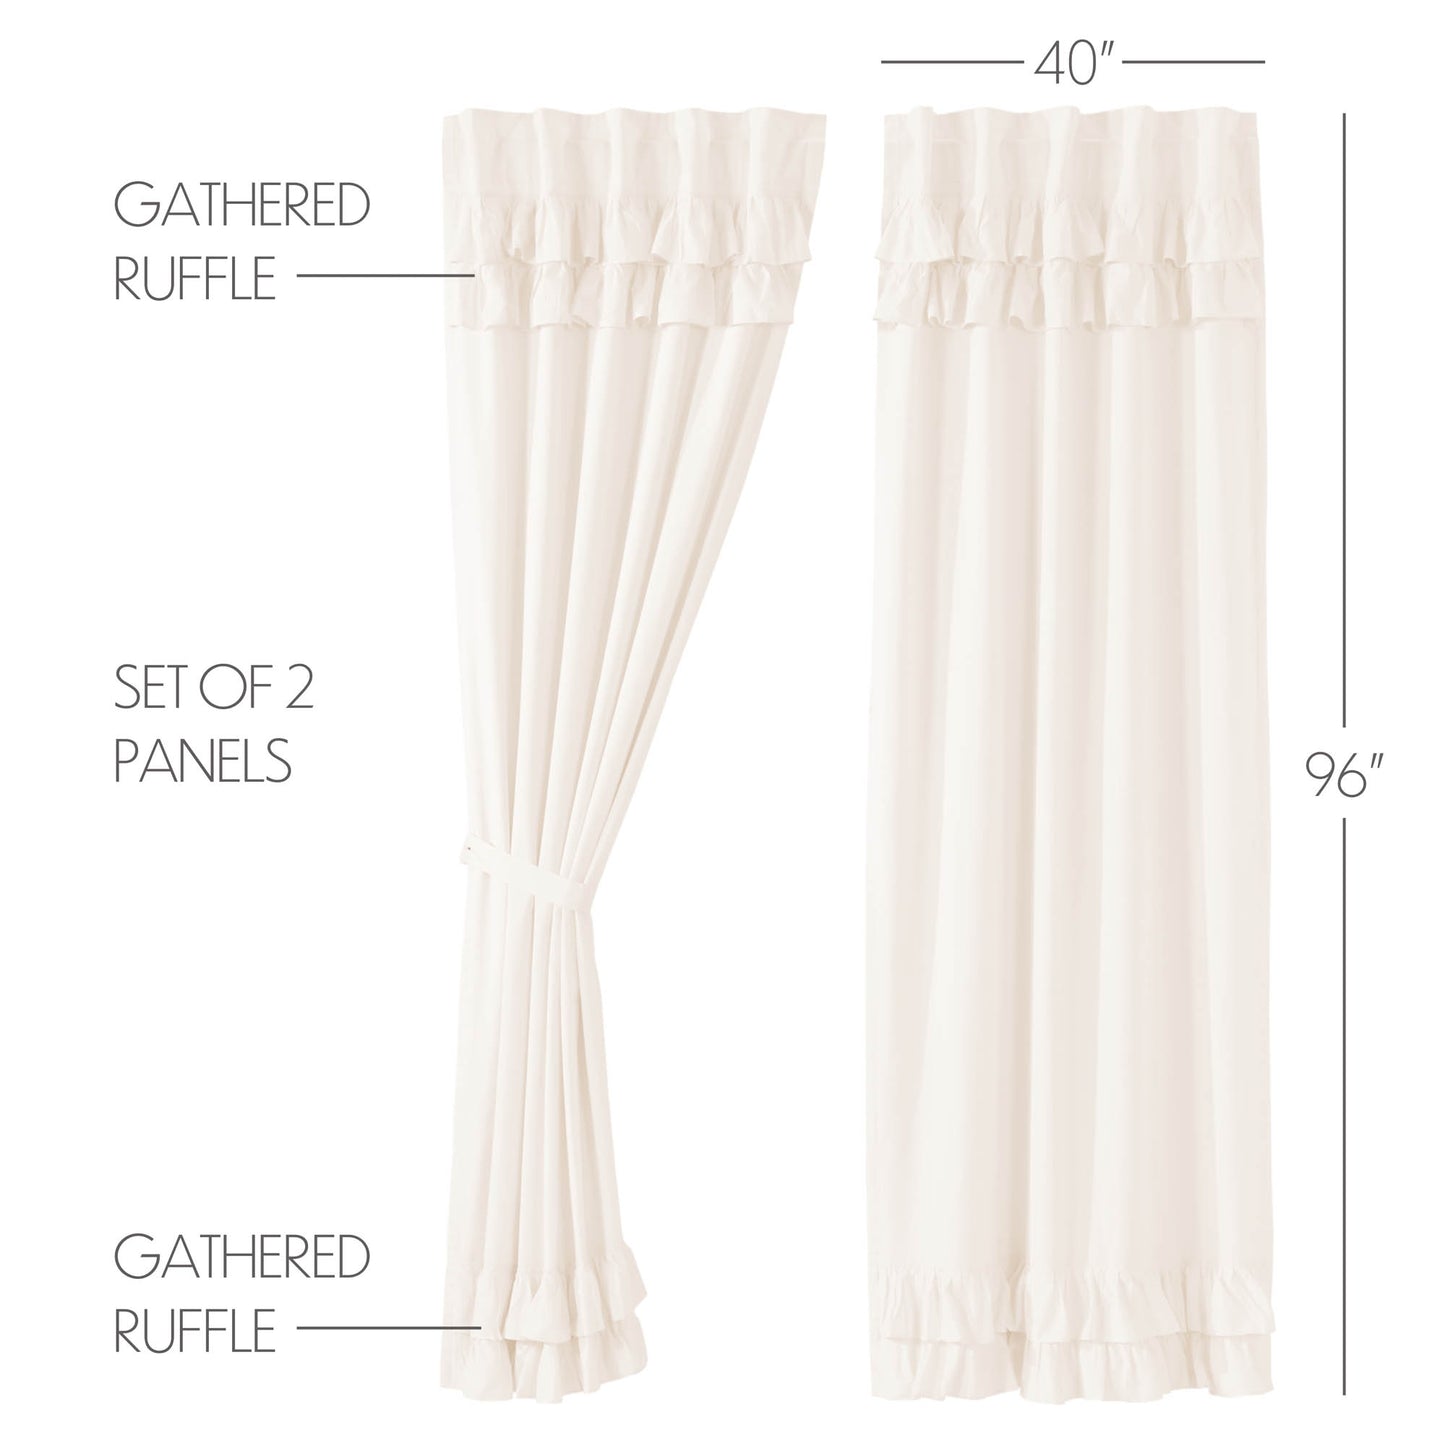 81499-Simple-Life-Flax-Antique-White-Ruffled-Panel-Set-of-2-96x40-image-3